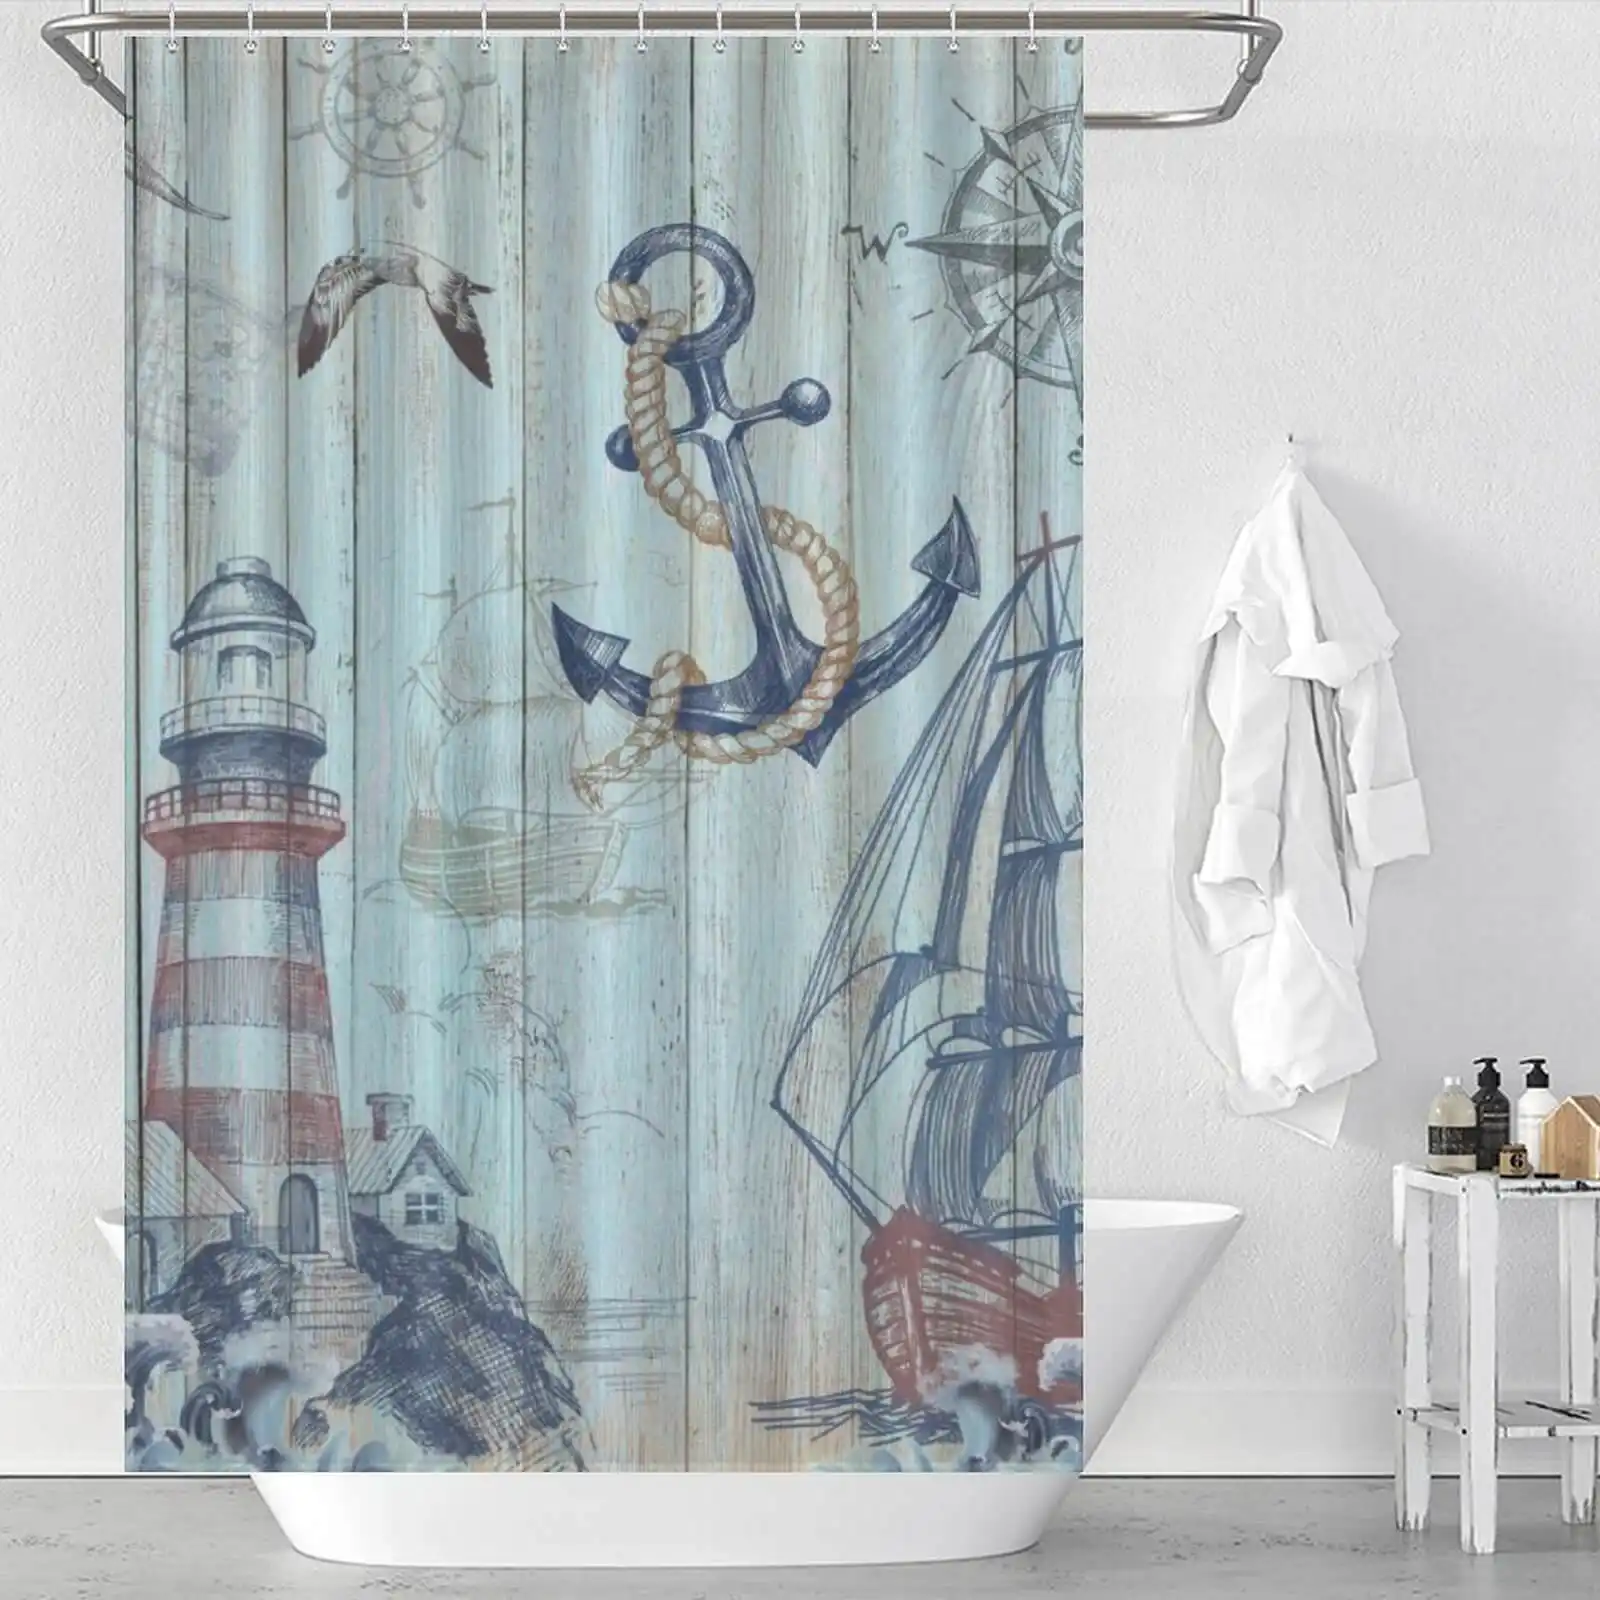 Guest bathroom shower curtain ideas: Nautical shower curtain with anchor and lighthouse.